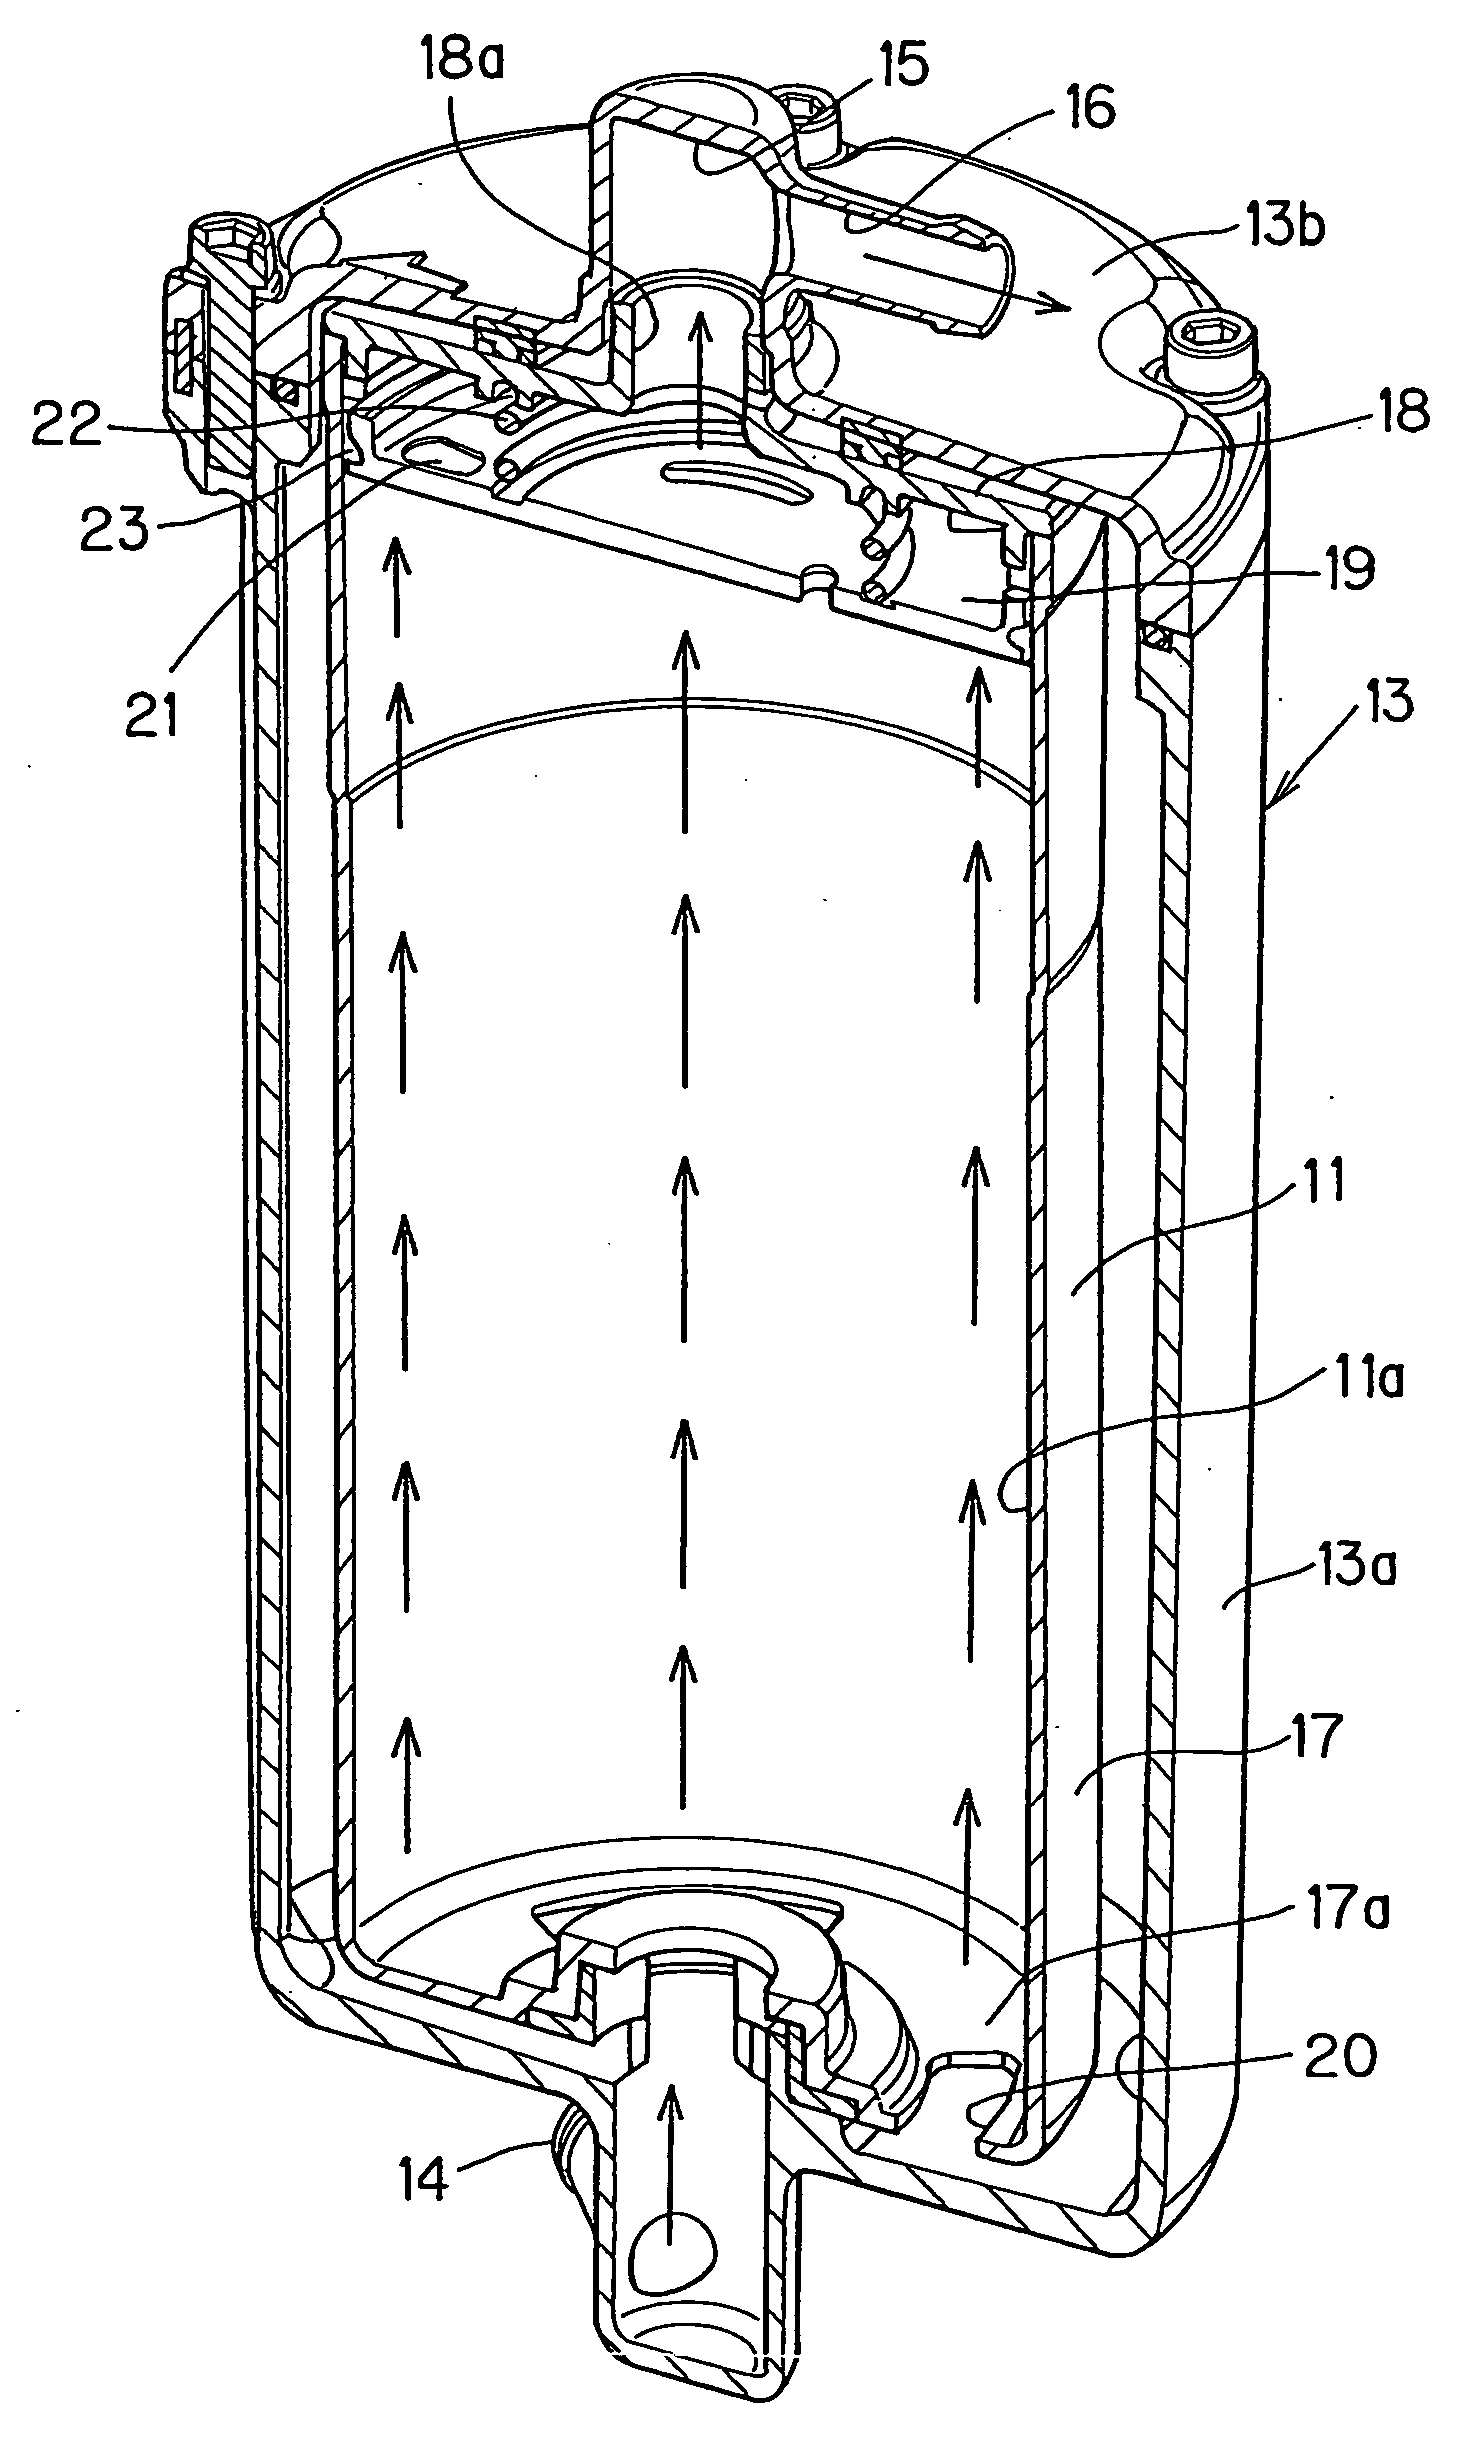 Ion-exchange filter